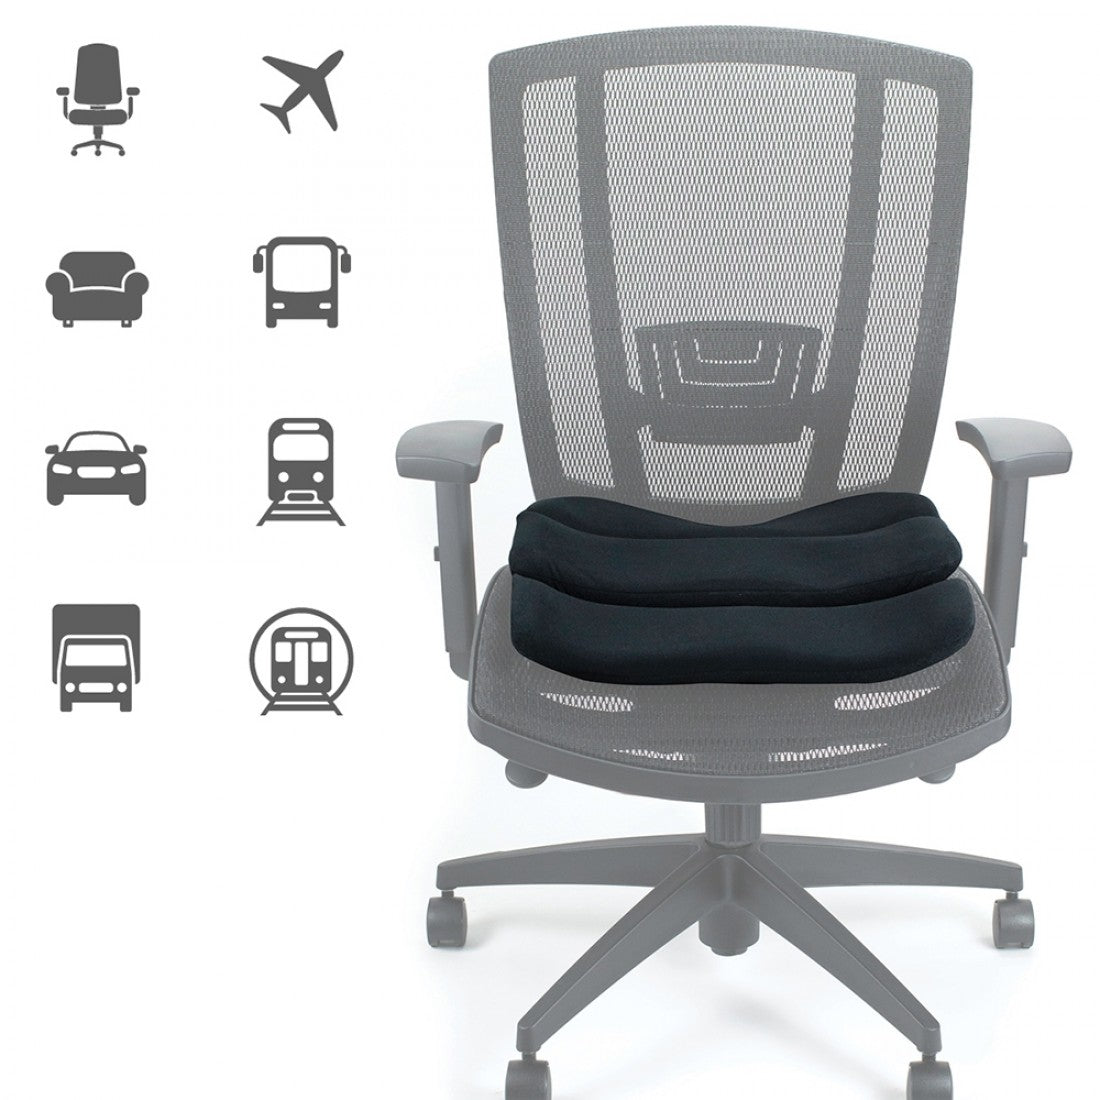 ObusForme Contoured Seat Cushion - SpaSupply